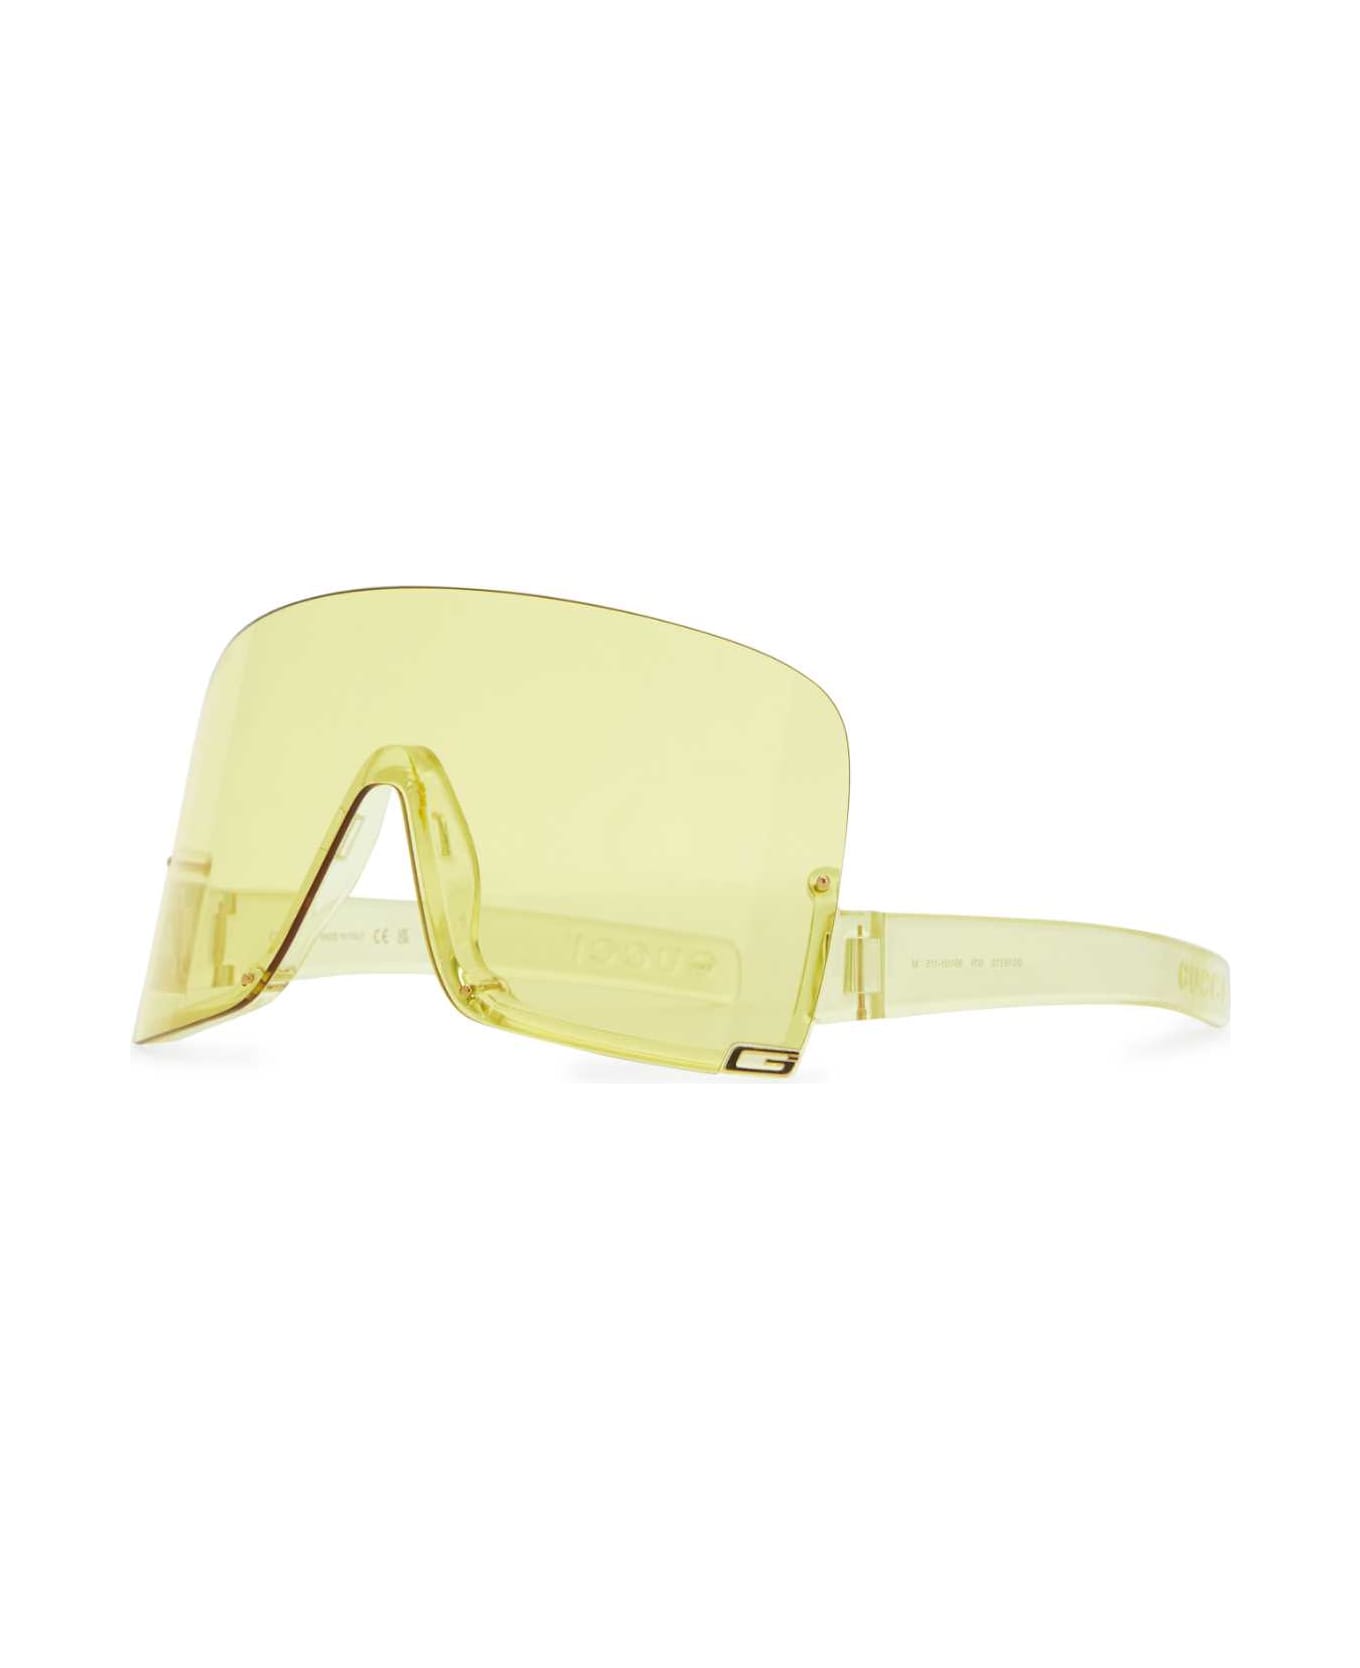 Gucci Yellow Acetate Sunglasses - 7474